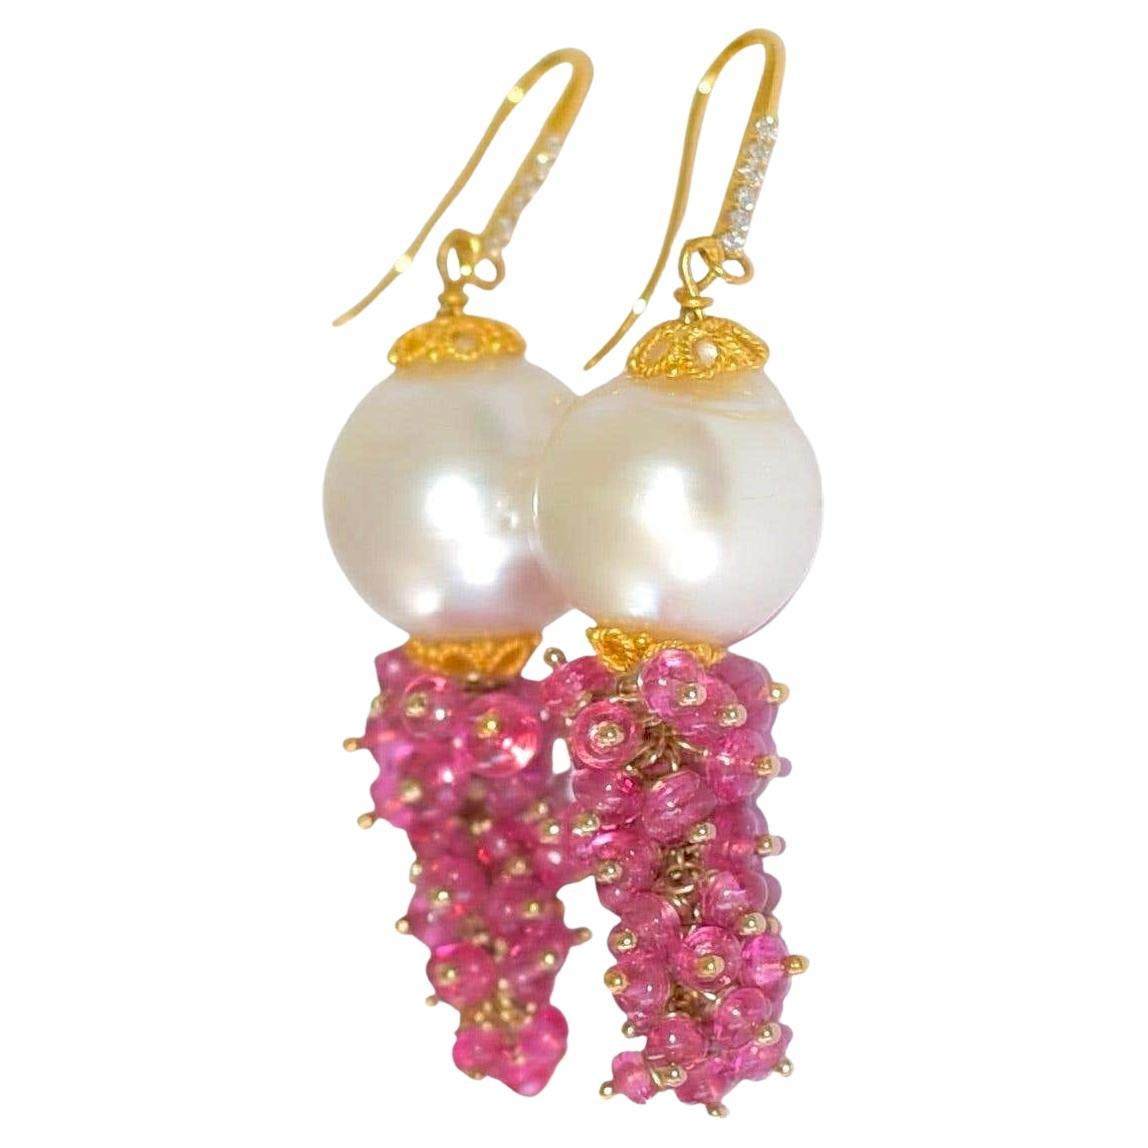 Neon Hot Pink Burmese Jedi Spinel, South Sea Pearl Earrings in 14K Solid Gold